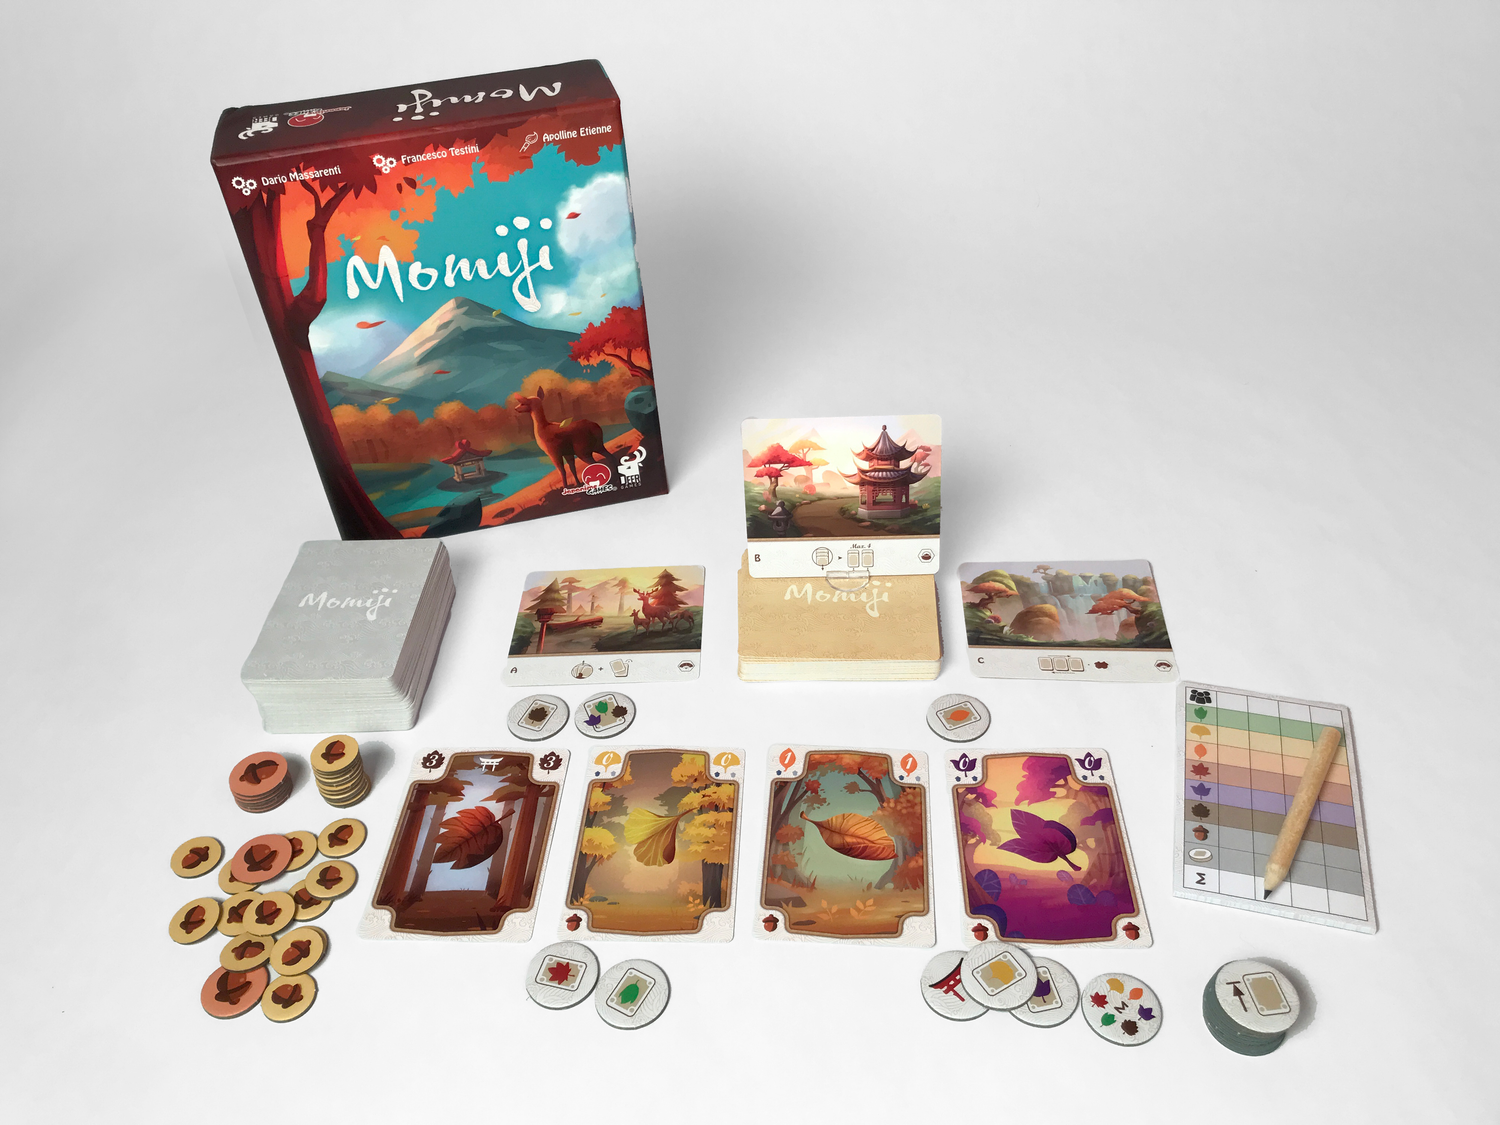 Momiji Japanese board game box contents